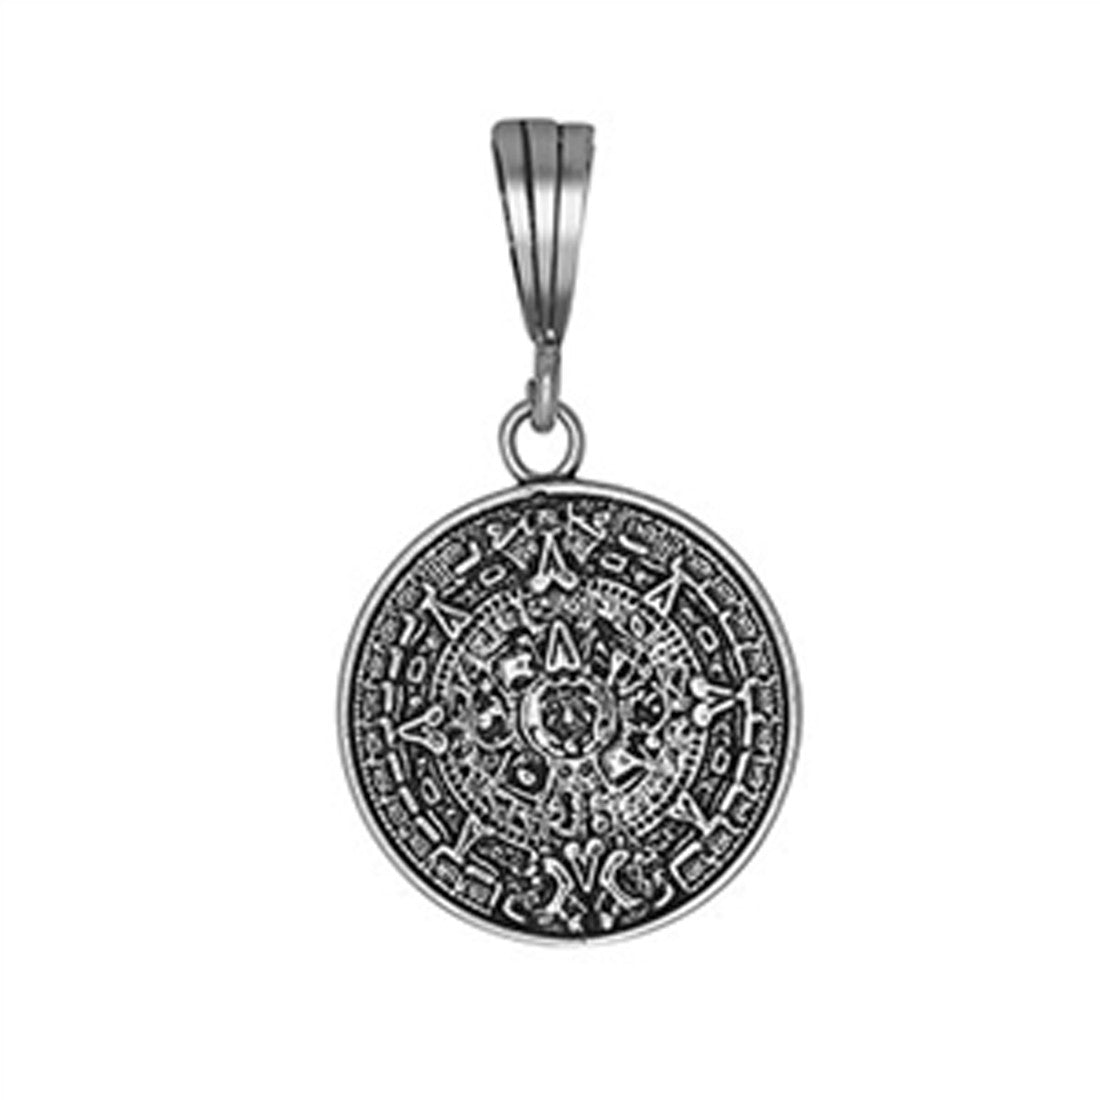 Aztec Calendar Pendant  925 Sterling Silver Oxidize charm 19mm Long-Blue Apple Jewelary